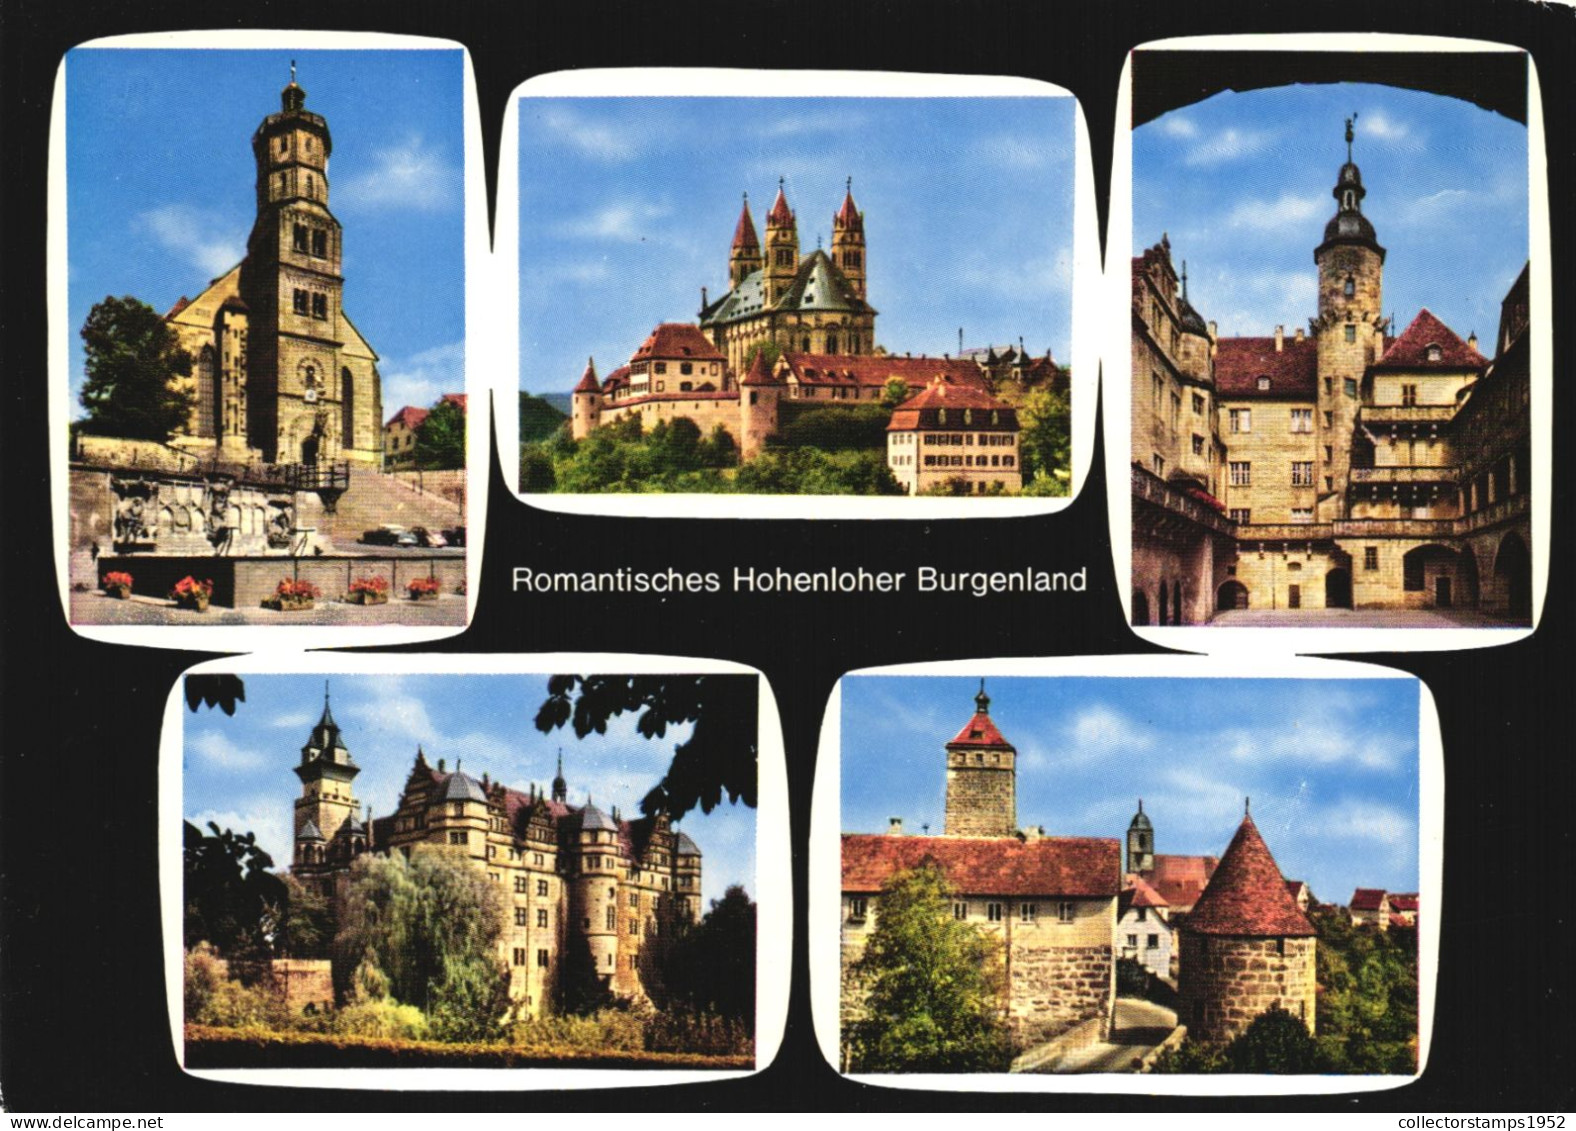 BURGENLAND, SAXONY ANHALT, MULTIPLE VIEWS, ARCHITECTURE, TOWER, CASTLE, GERMANY, POSTCARD - Burgenland